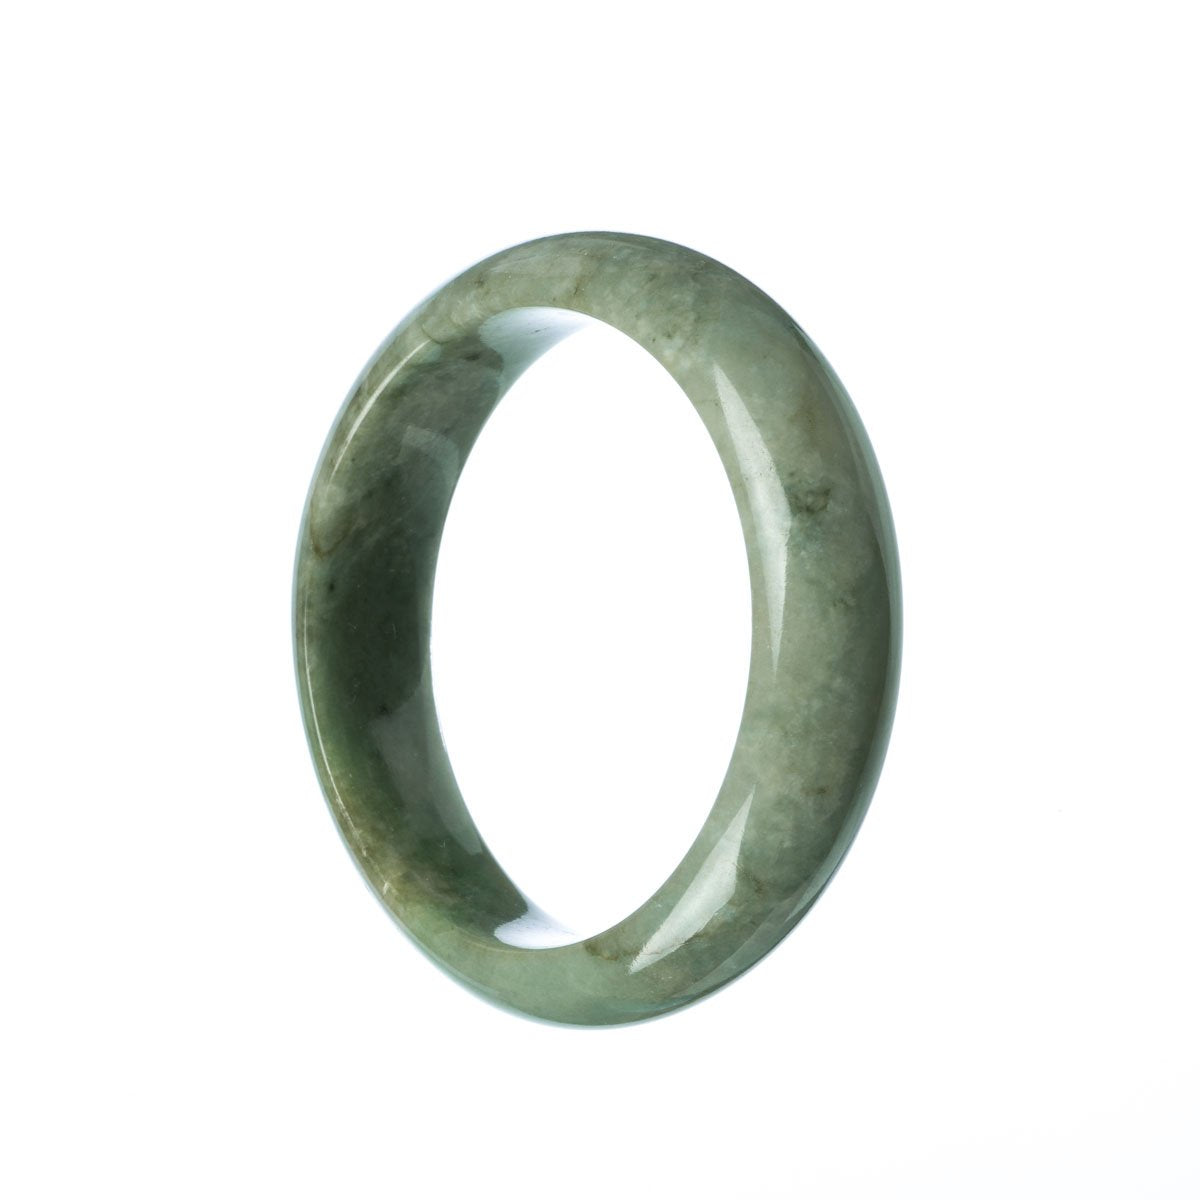 A half-moon shaped bracelet made of genuine untreated green Burmese jade, measuring 55mm. Handcrafted by Mays Gems.